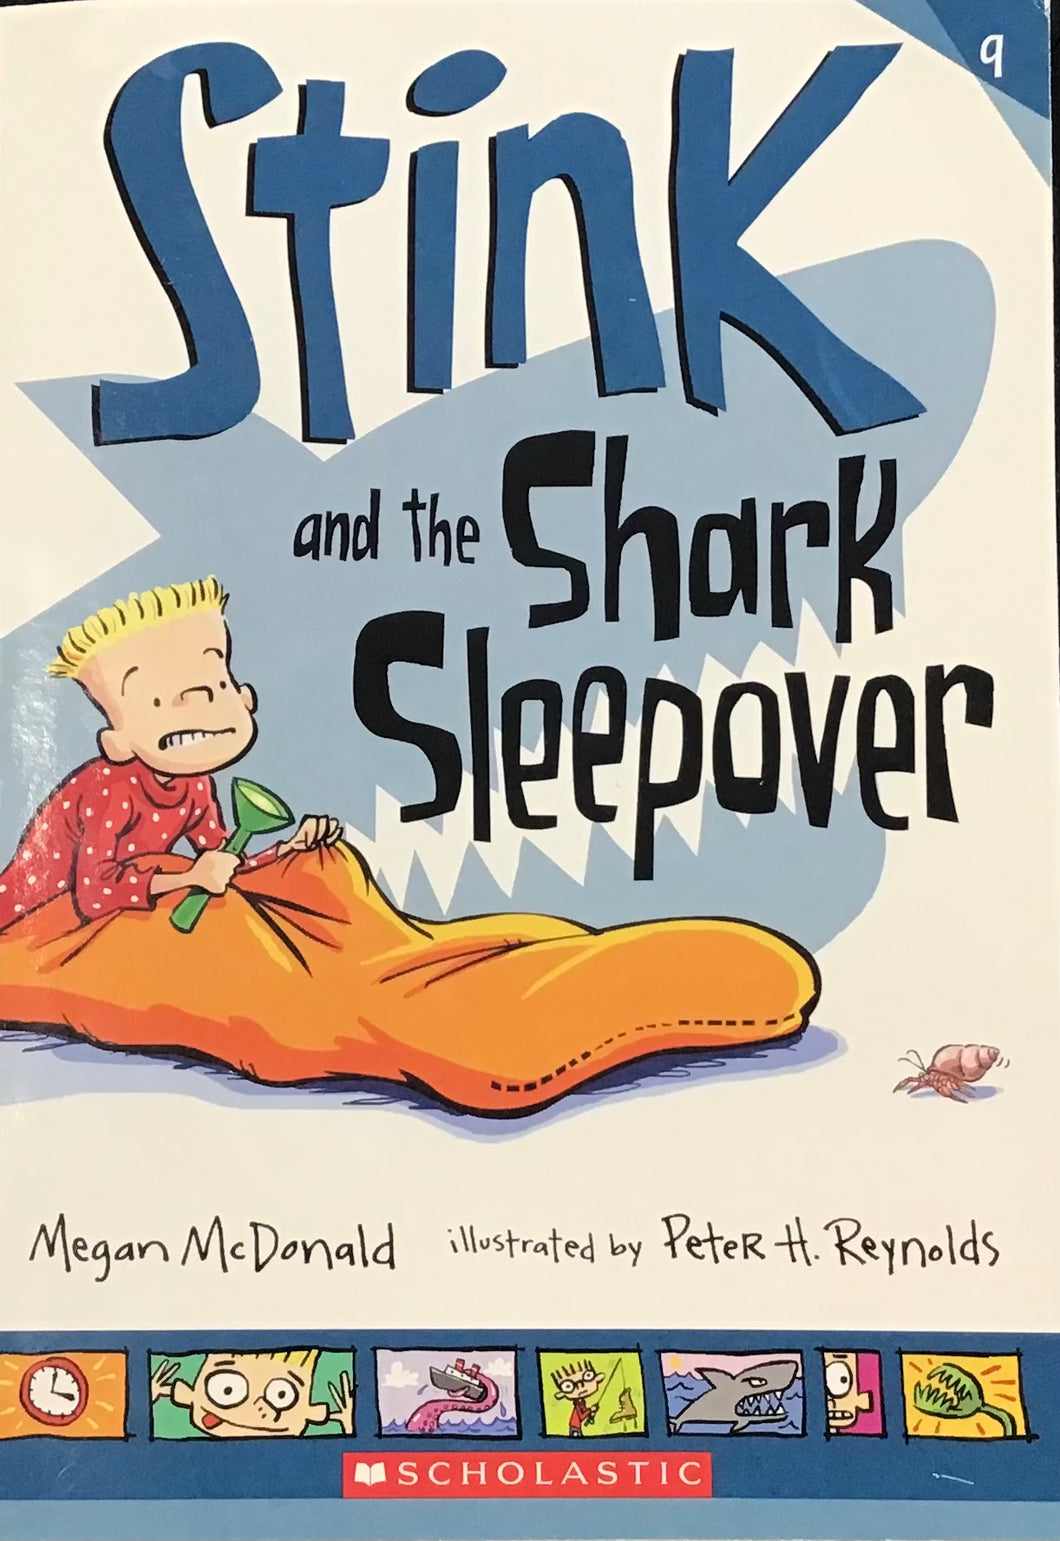 Stink and the Shark Sleepover, Megan McDonald & Peter H. Reynolds